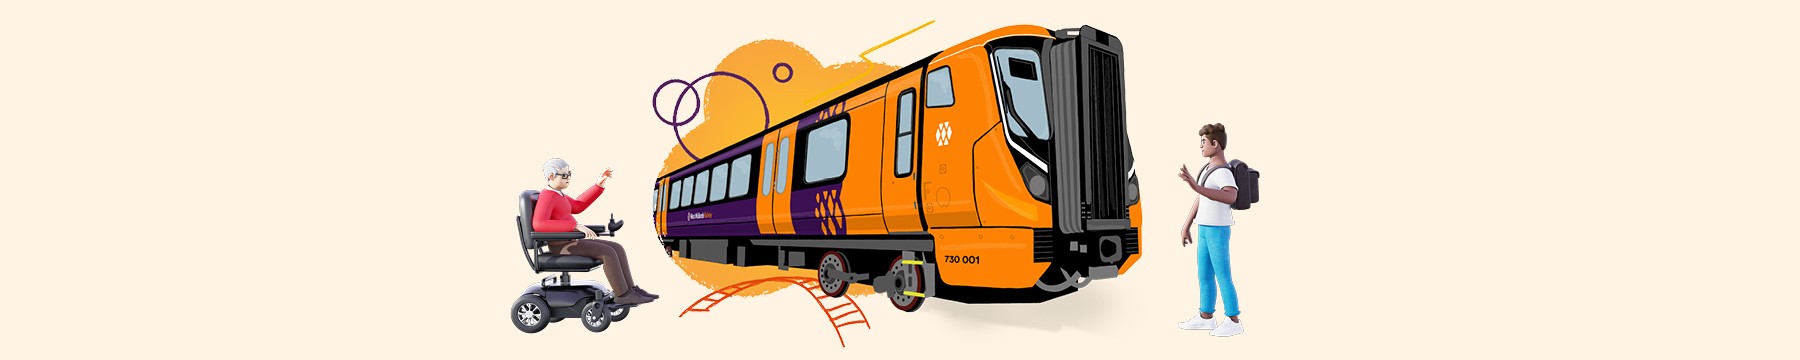 New Trains Class 730 illustration